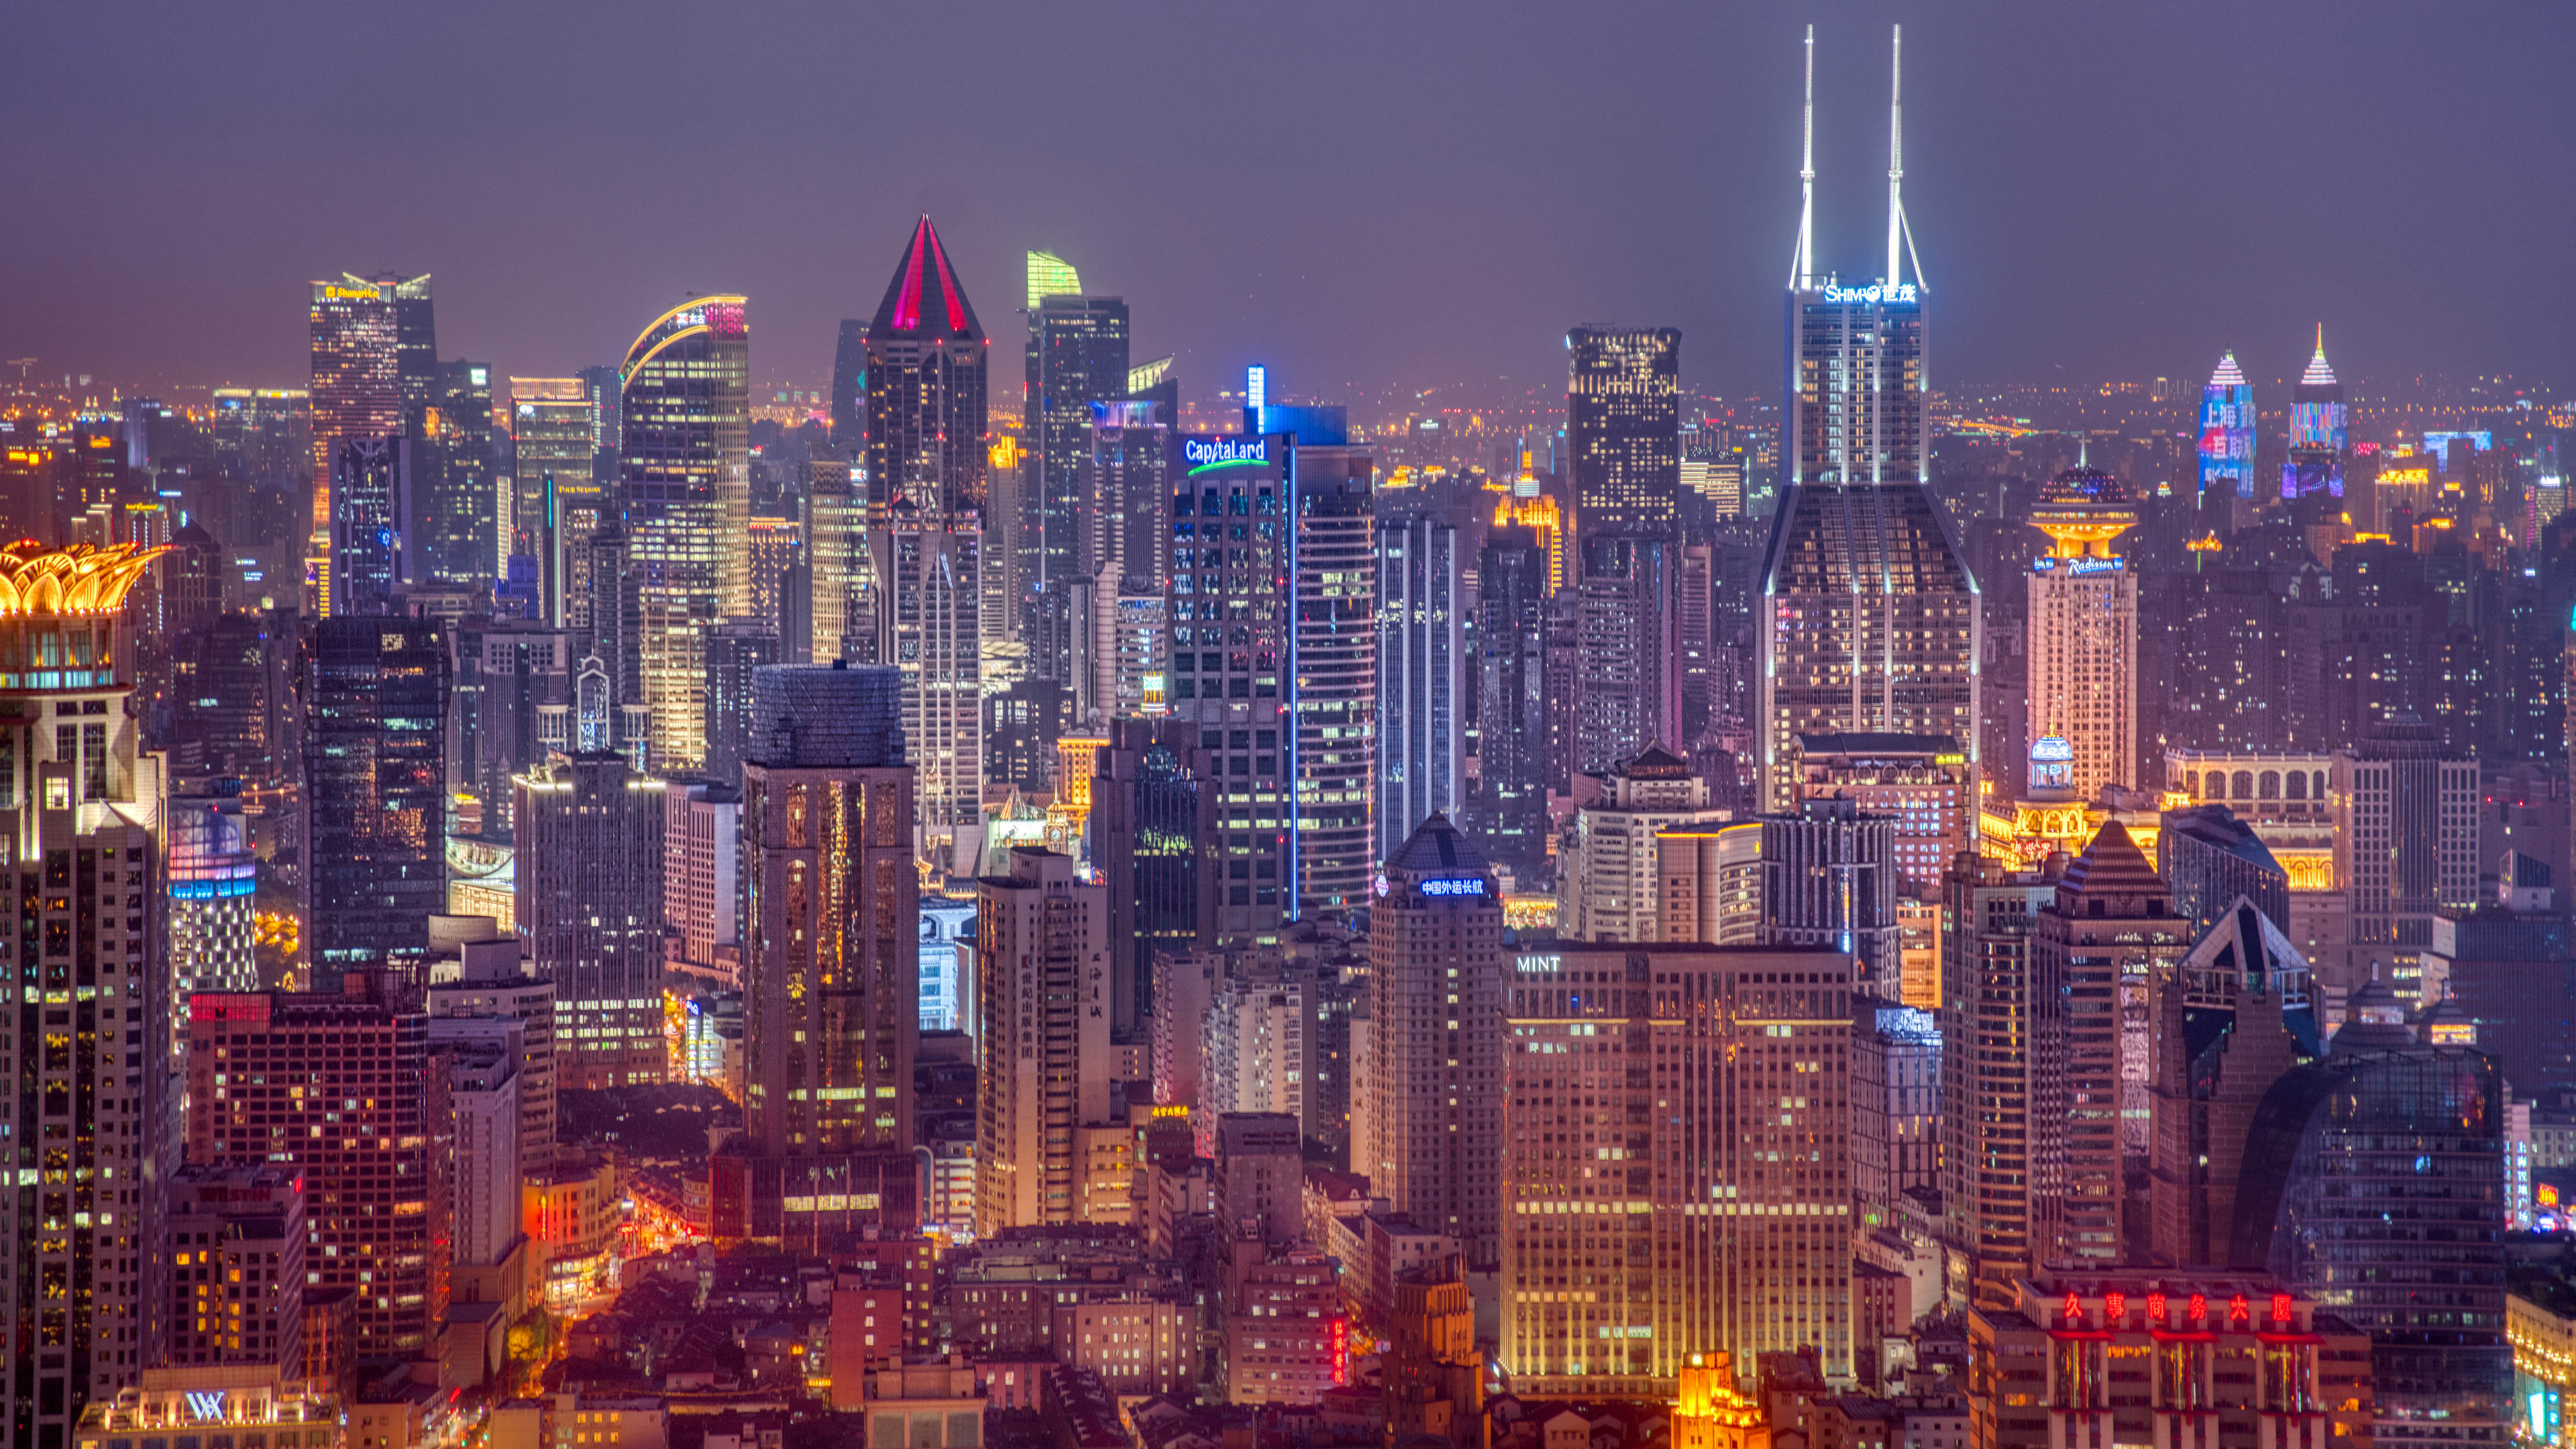 General 3840x2160 Trey Ratcliff photography city city lights cityscape night Shanghai low light building